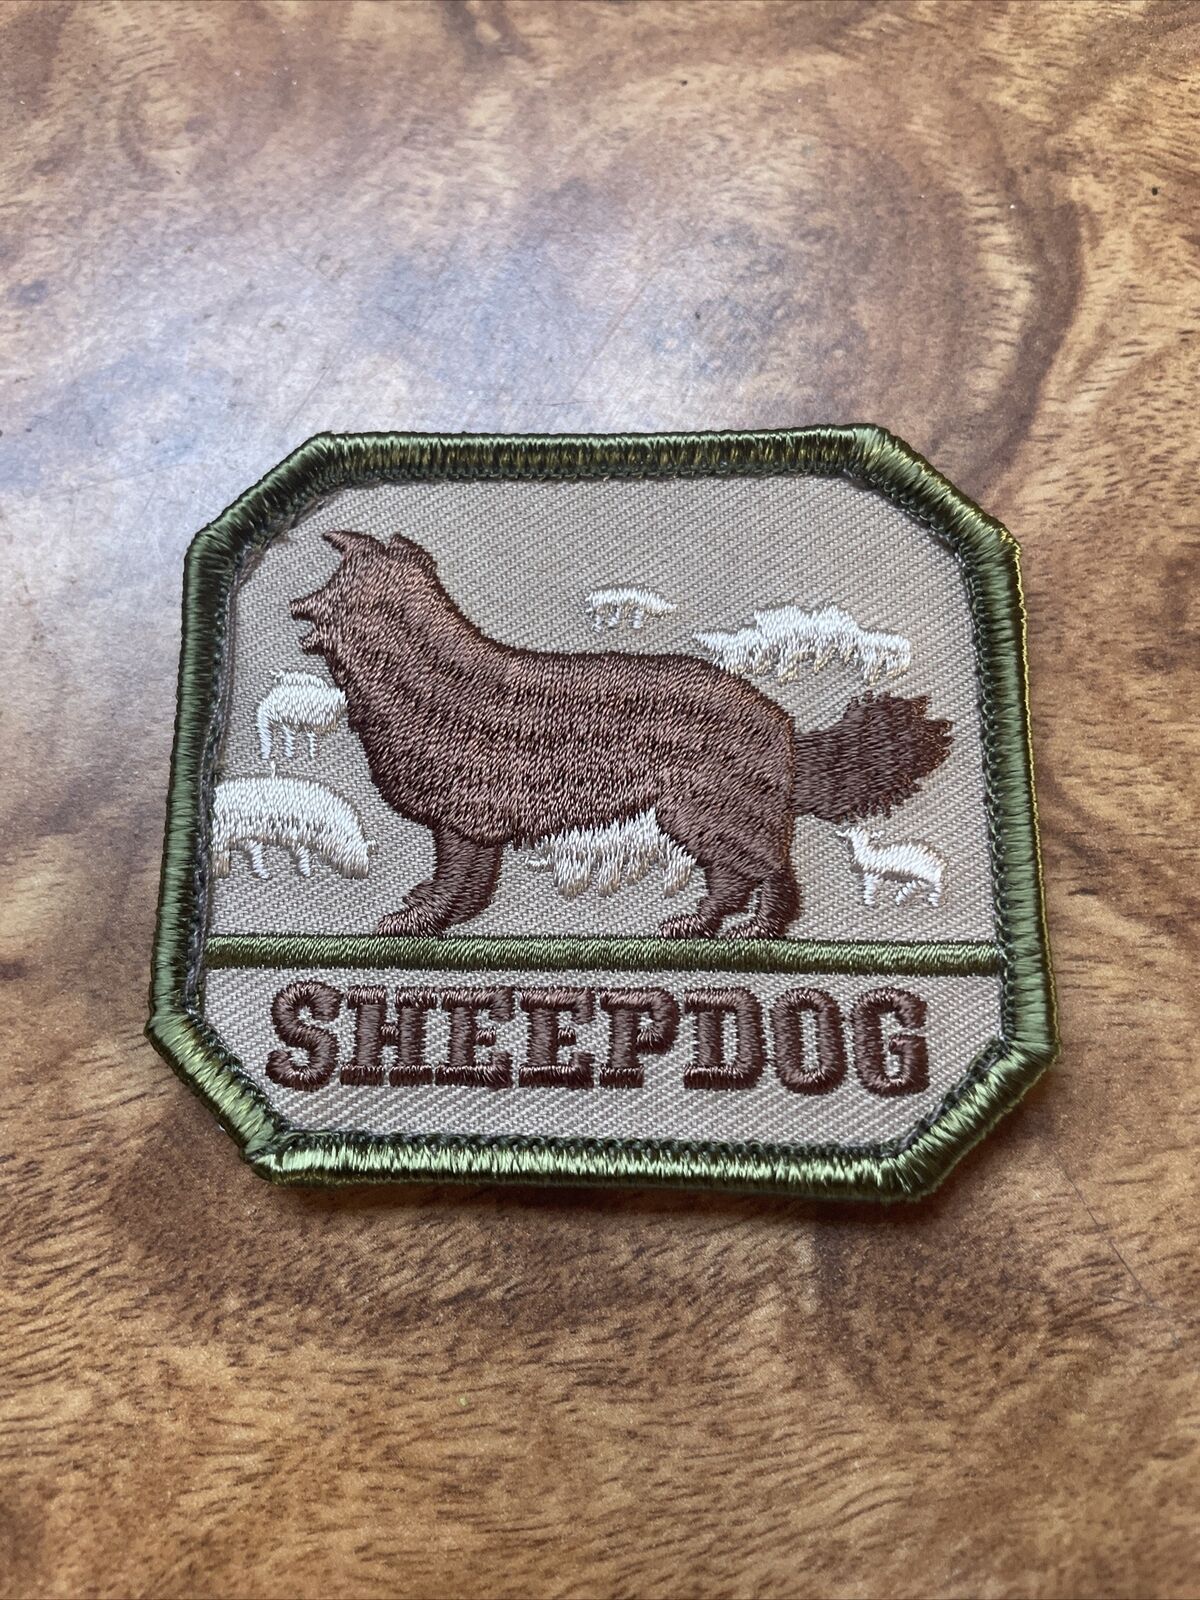 Mil Spec Monkey Sheepdog Tactical morale US military patch Velkro Hook Loop